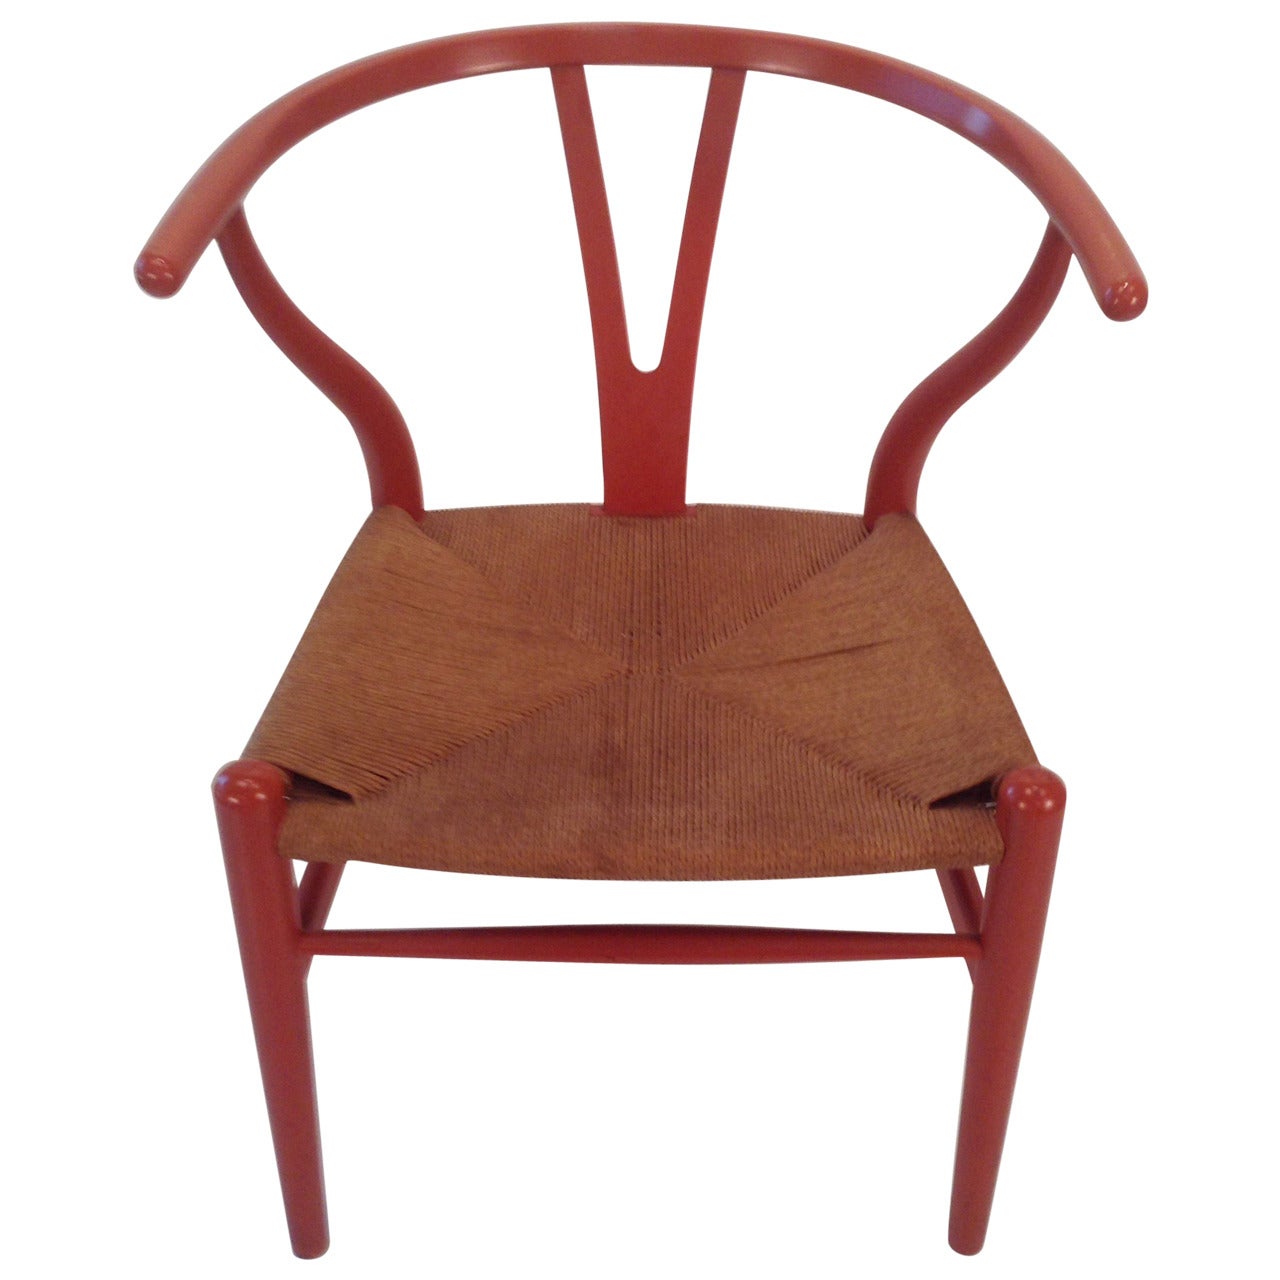 Early Original Hans Wegner Wishbone, , Y Chair, , Carl Hansen, Denmark